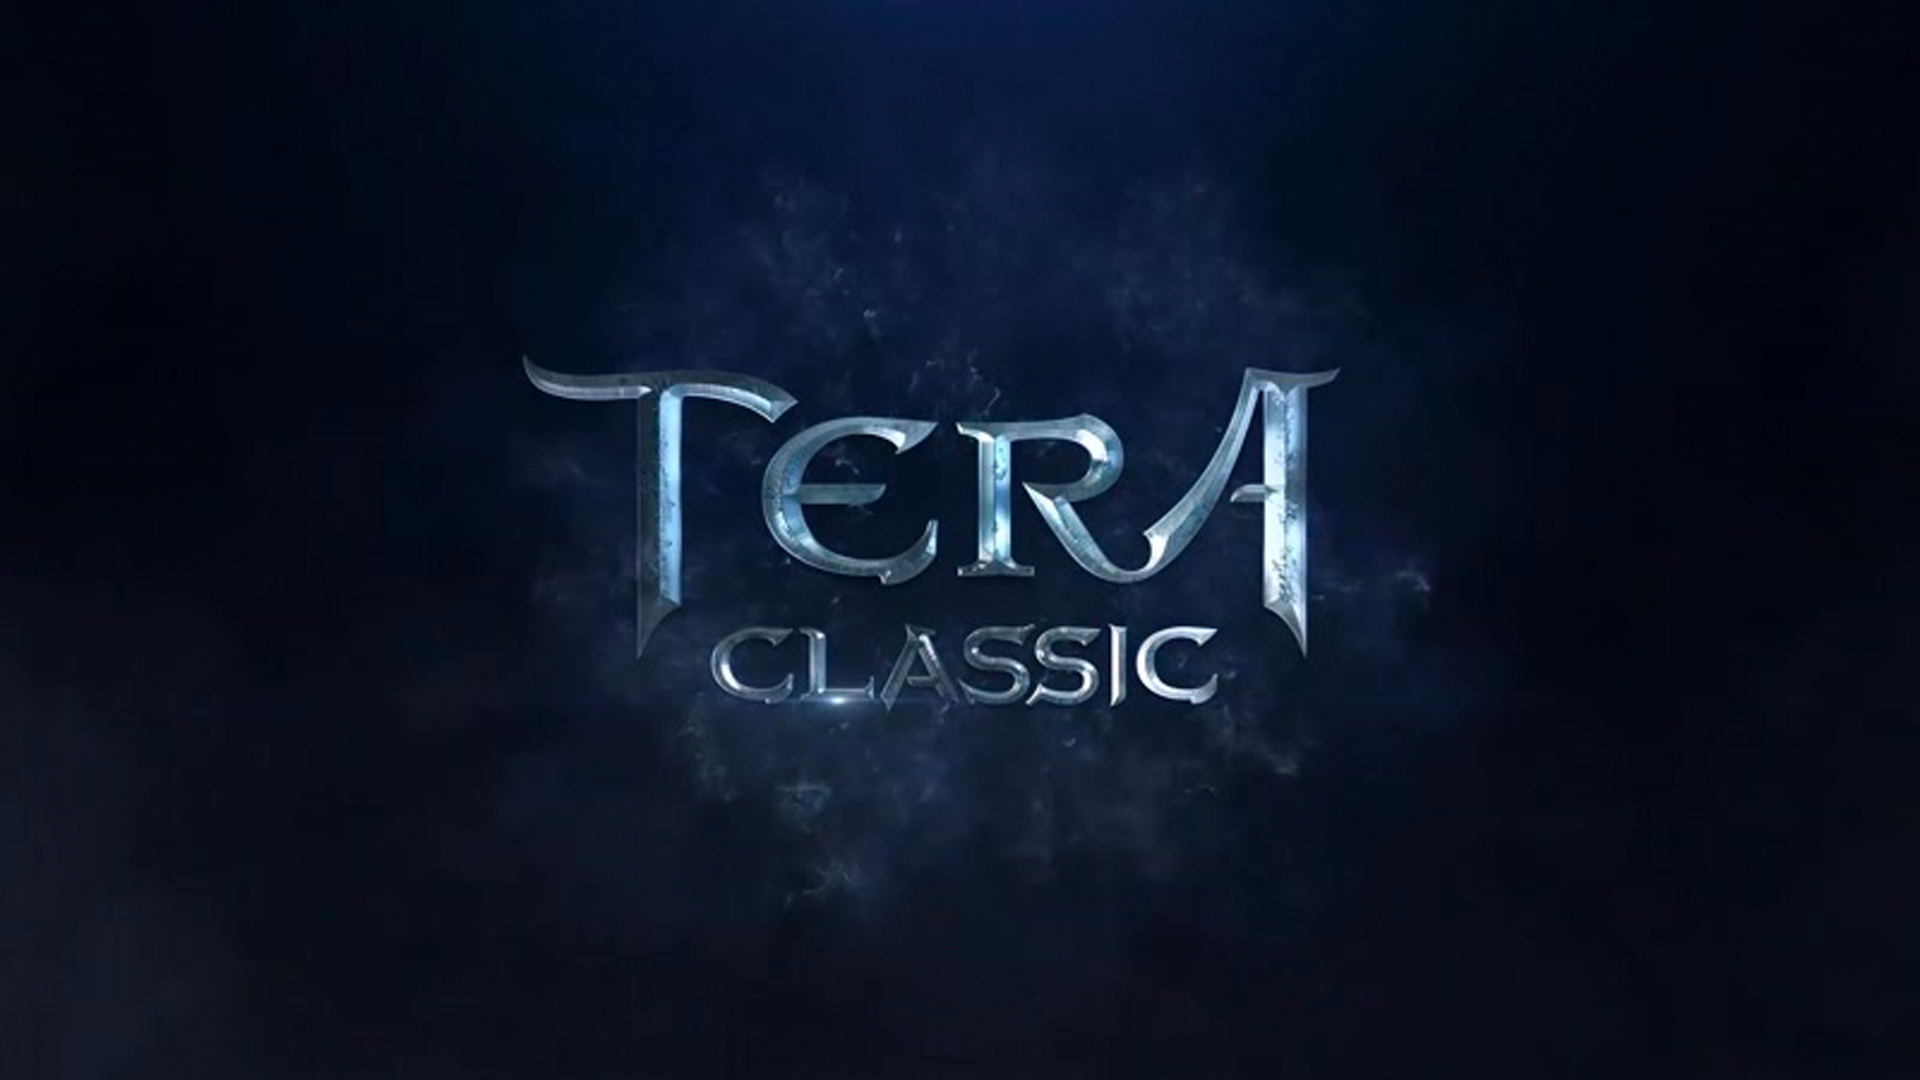 Banner of TERA CLASSIQUE 1.5.0